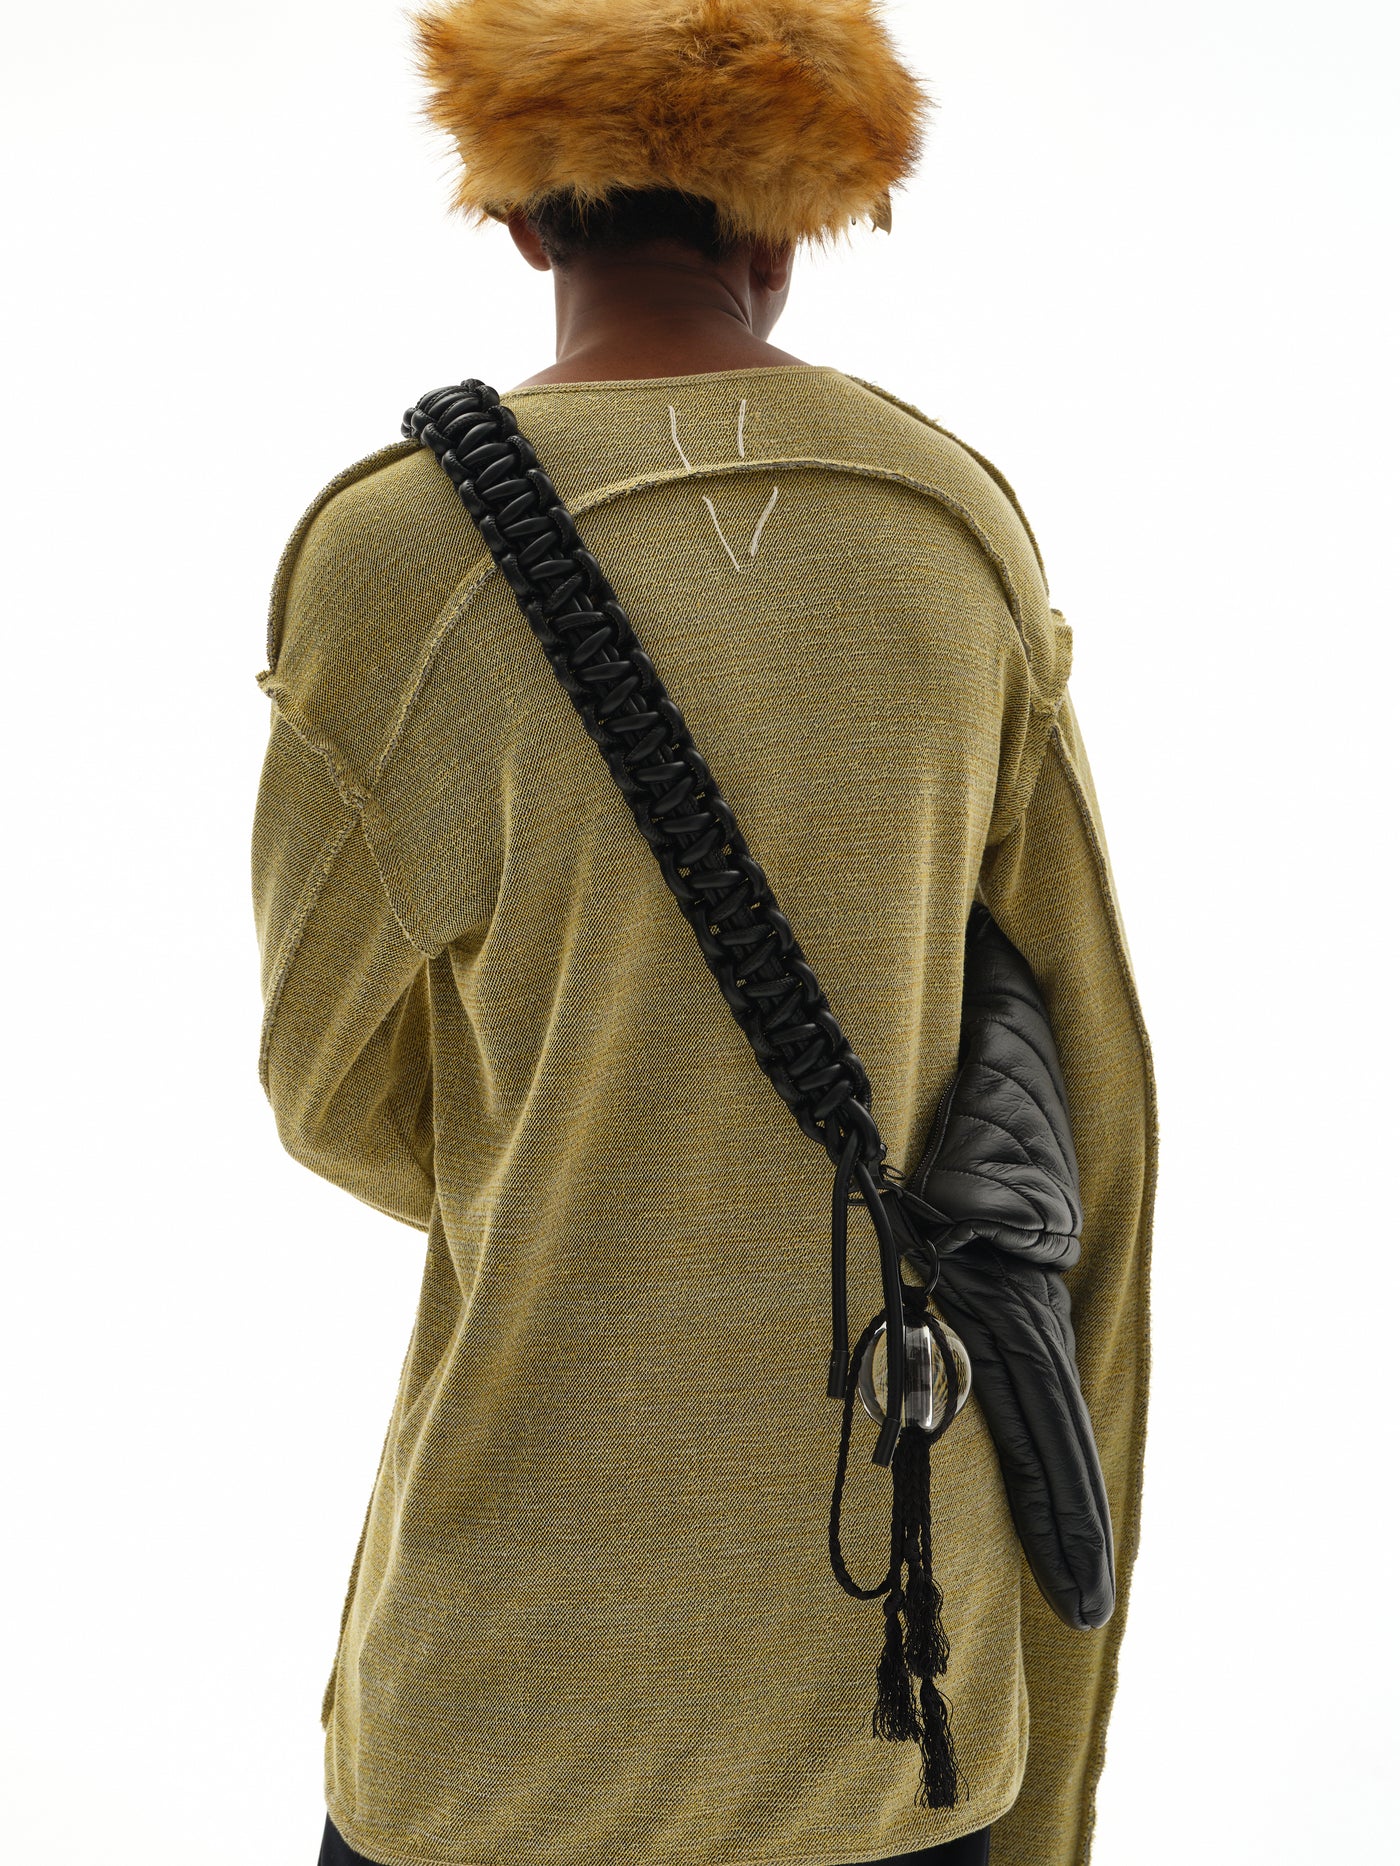 NUTEMPEROR / ナットエンペラー - PU LEATHER BAG肩掛け部分の編み込みの仕様